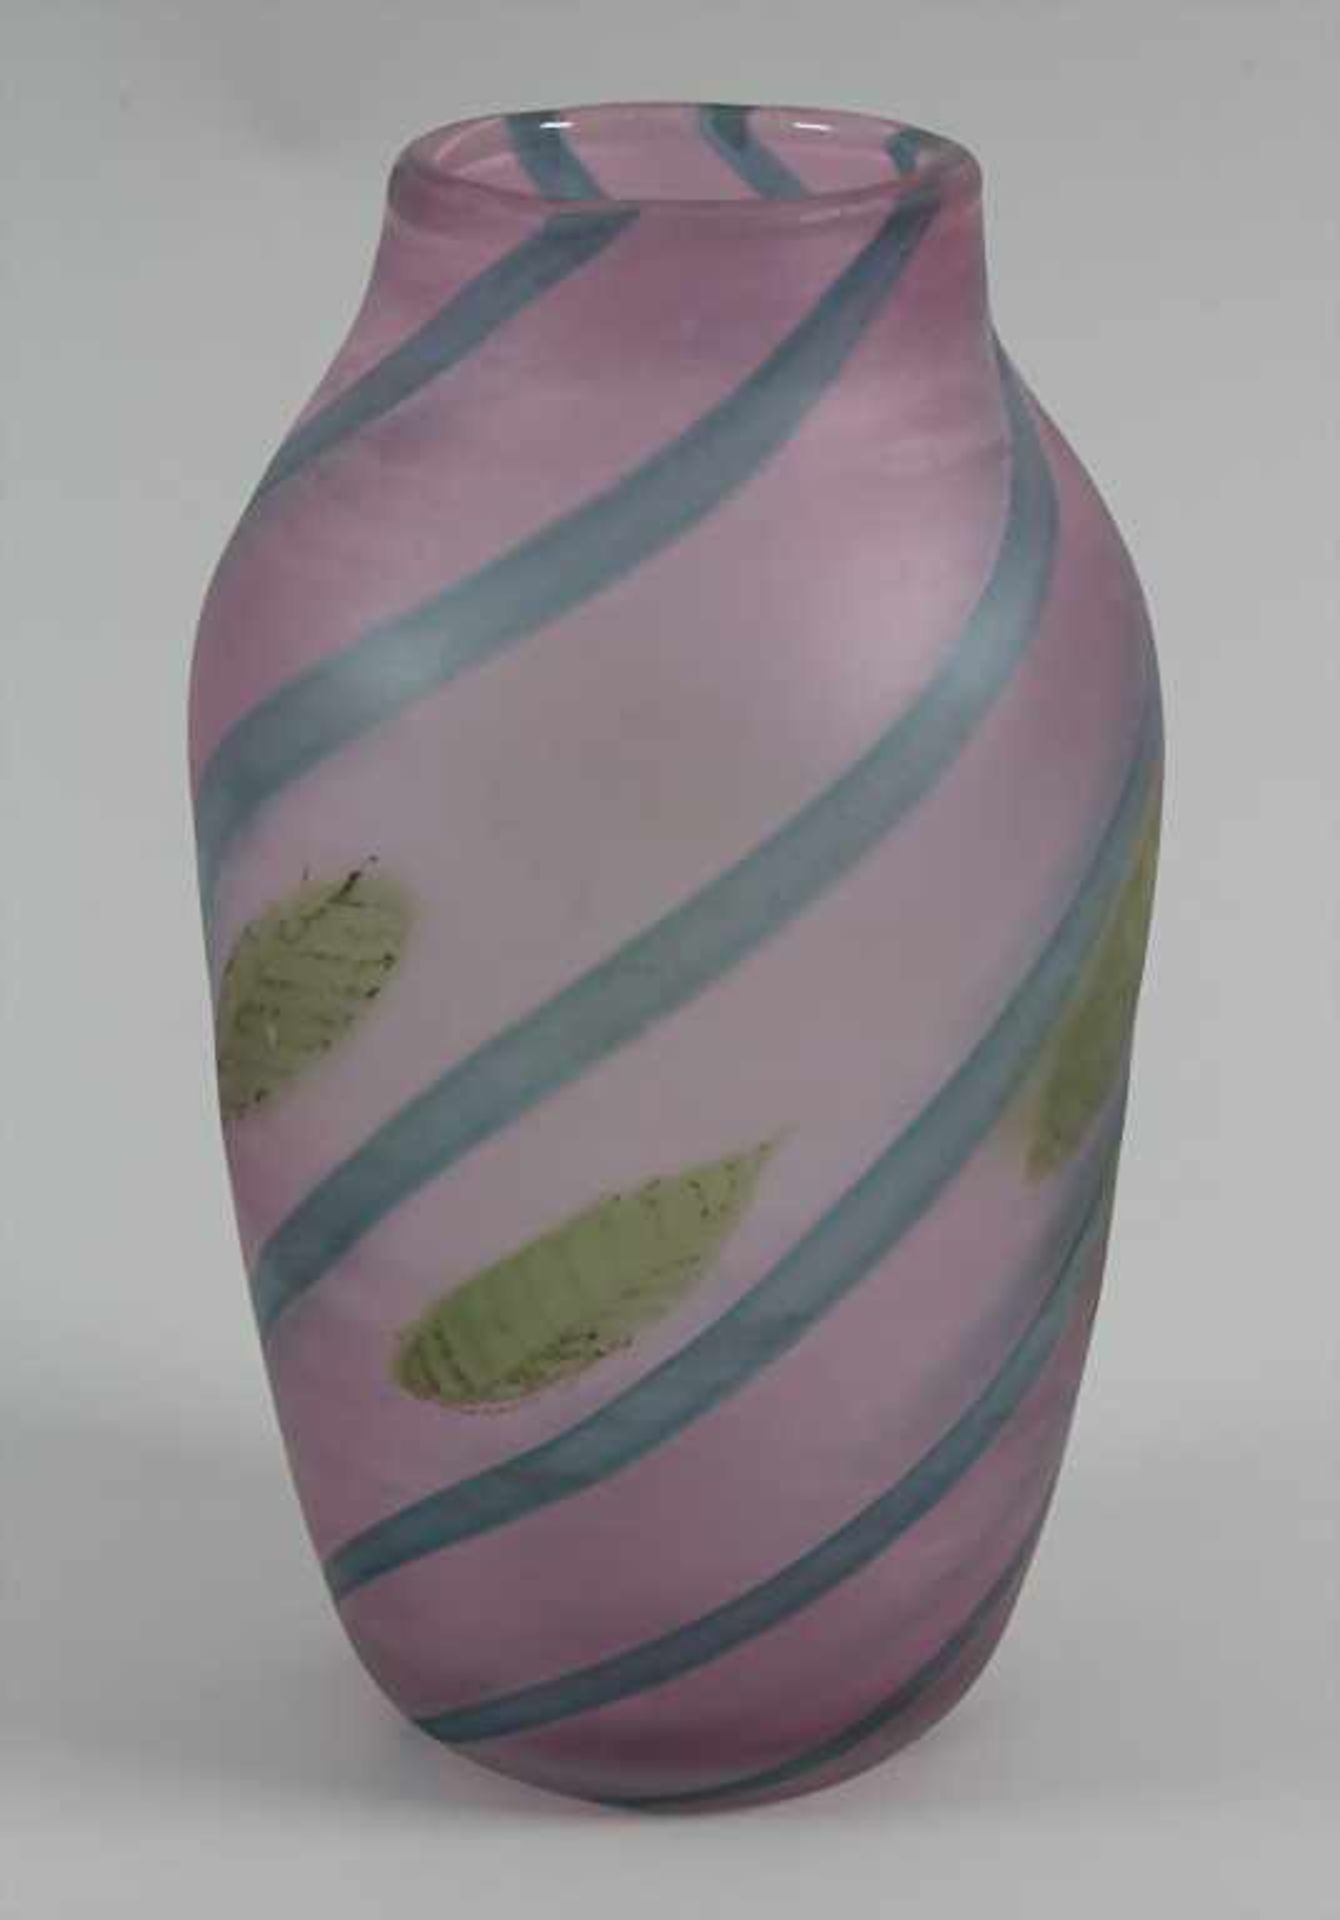 Glasziervase / A decorative vase, Cenedese, Murano, 80/90er Jahre - Image 2 of 6